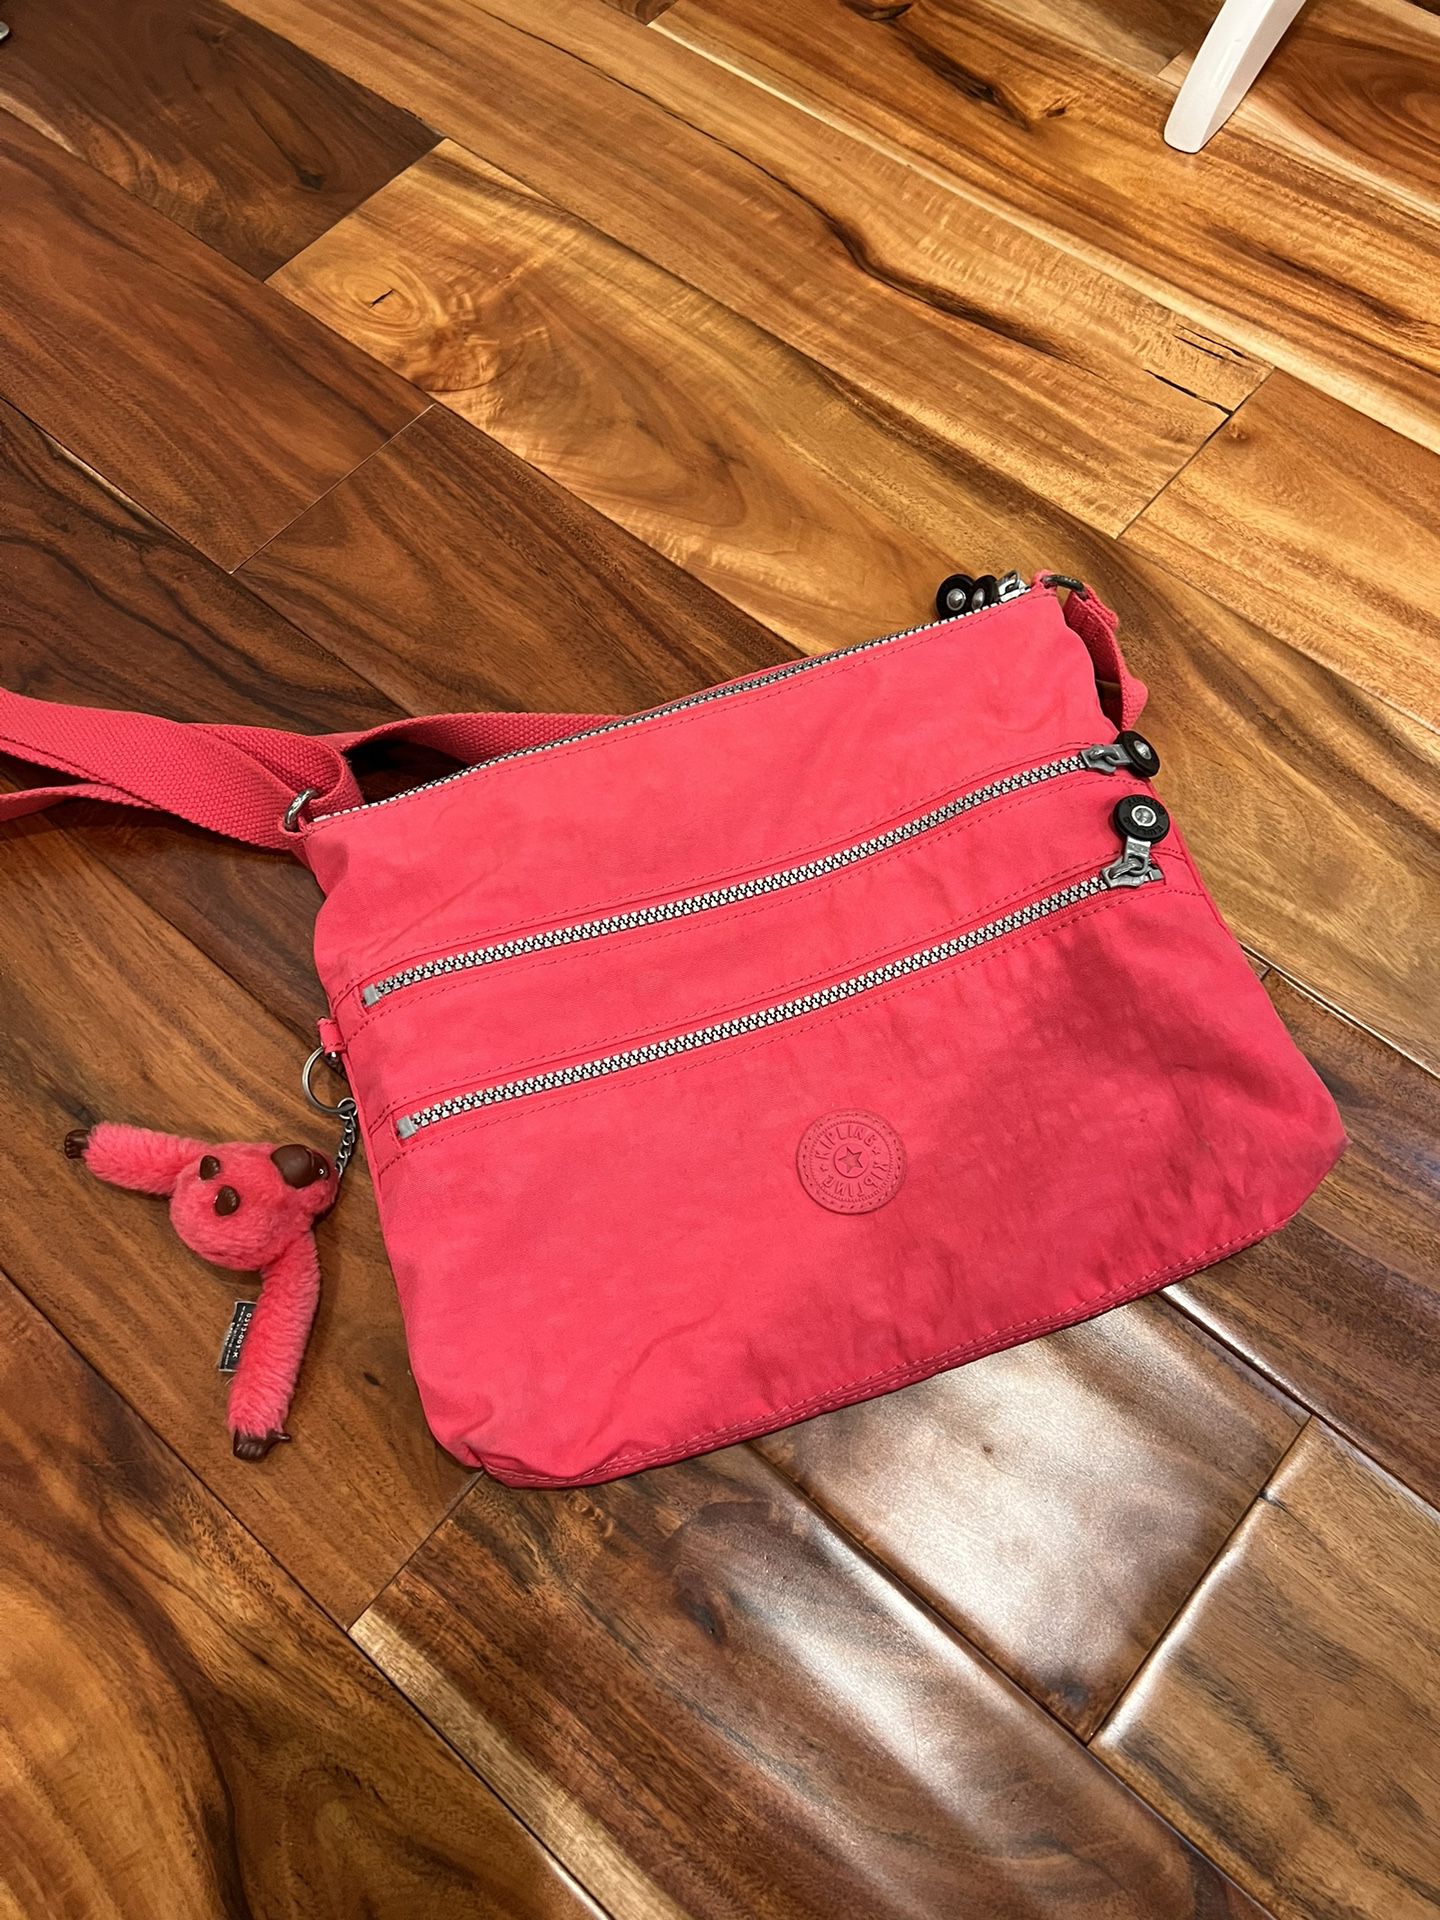 Kipling Cross-body Bag in Pink